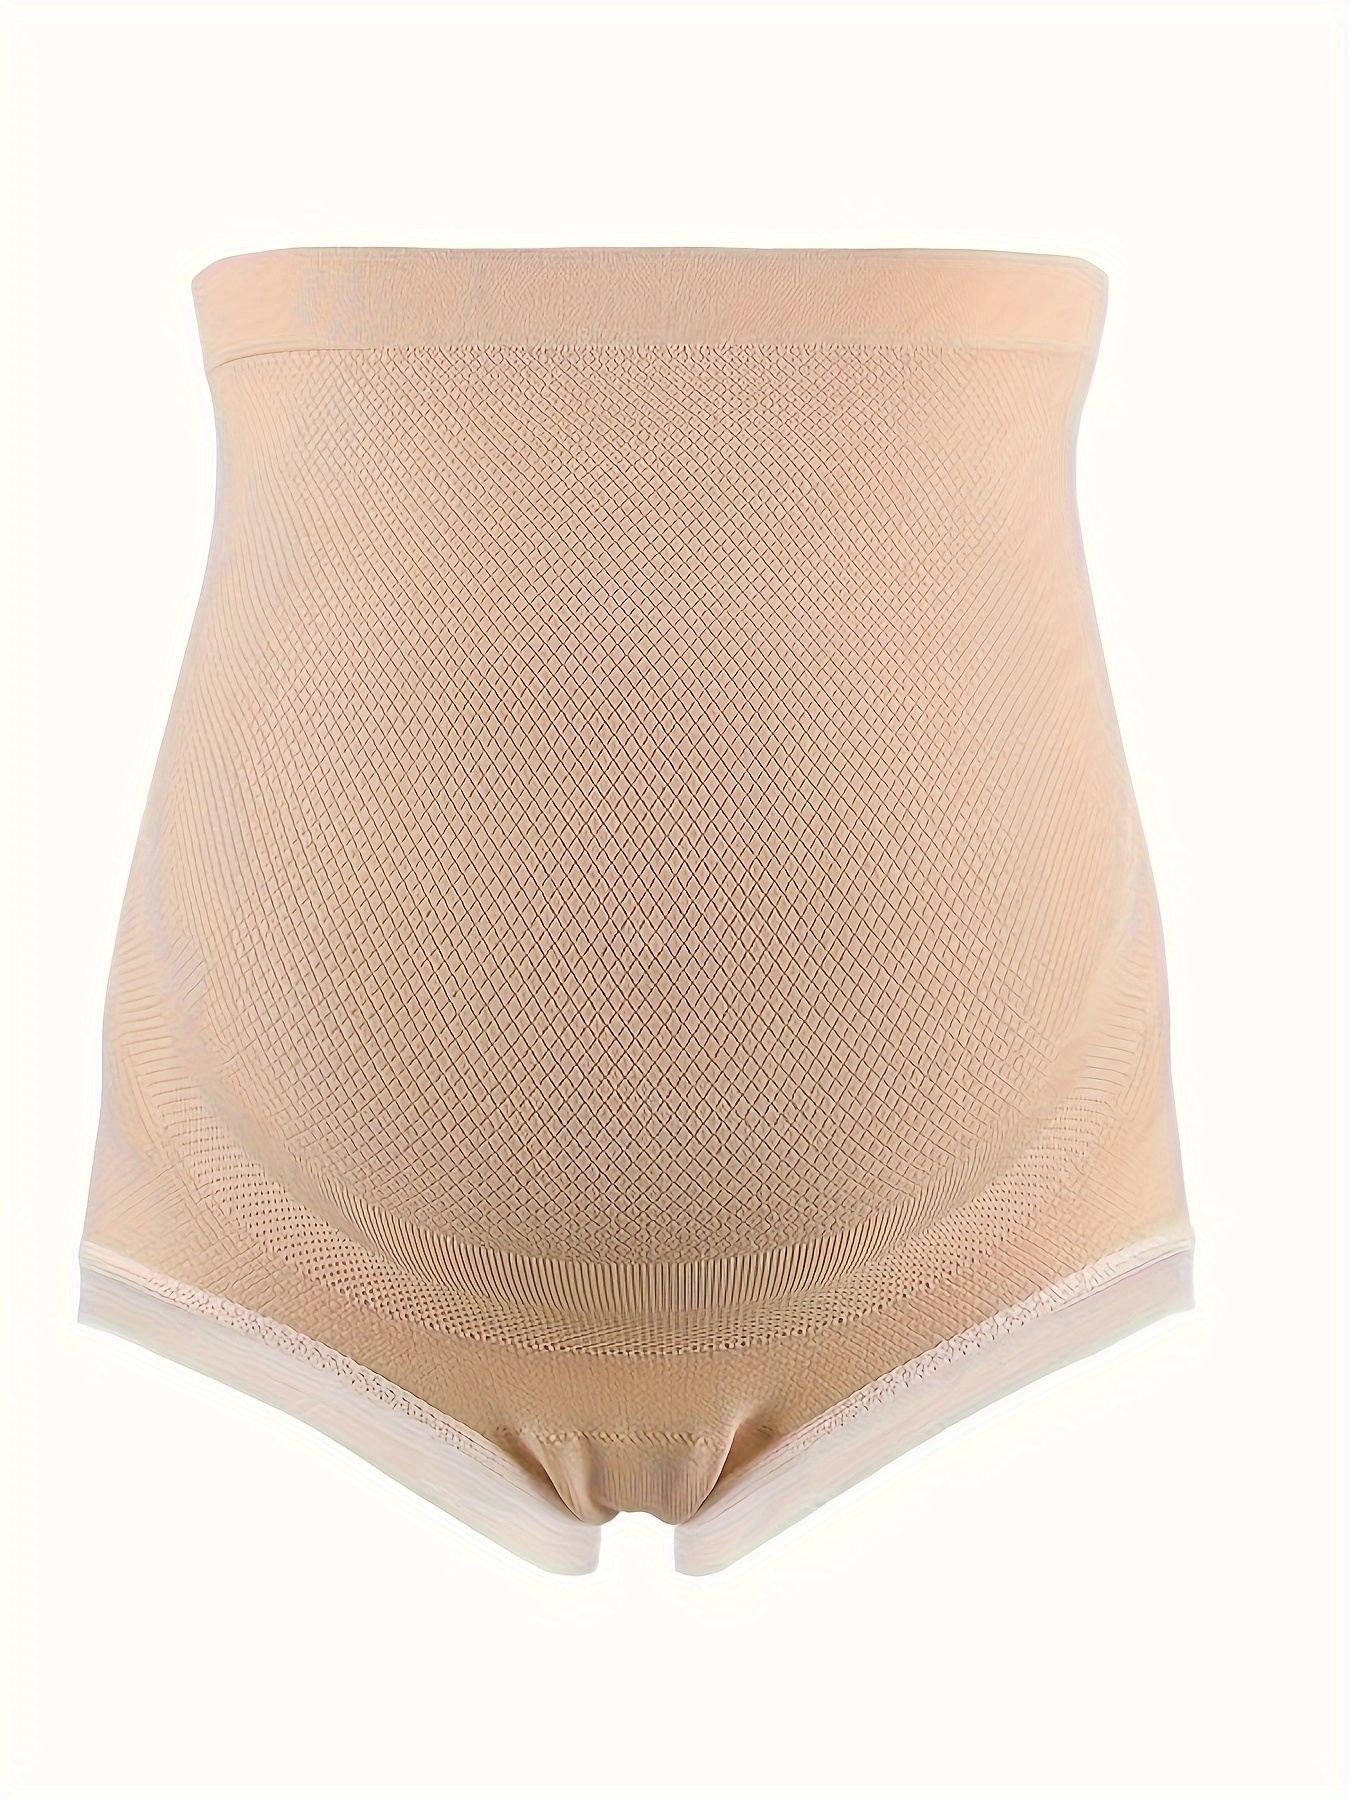 DPTALR Pregnant women's underwear with high waist and belly support 